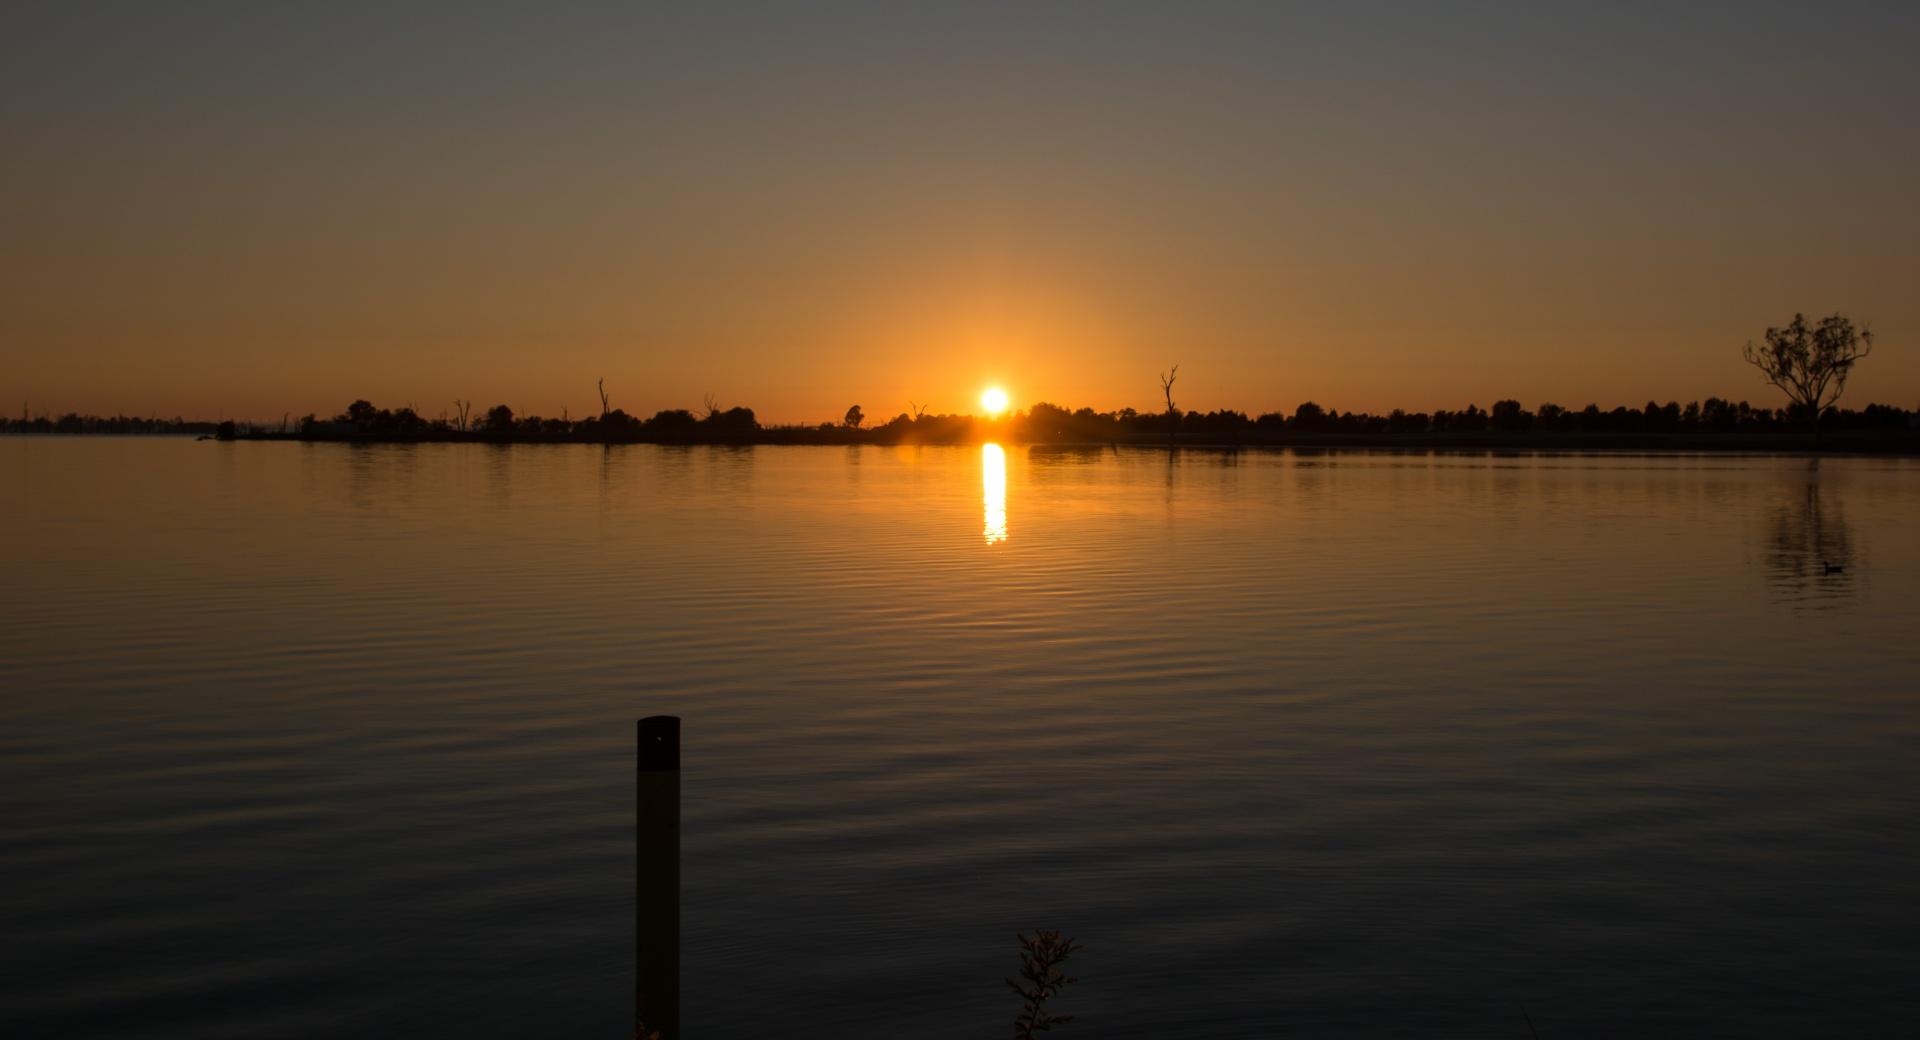 Lake Mulwala Sunrise at 1152 x 864 size wallpapers HD quality